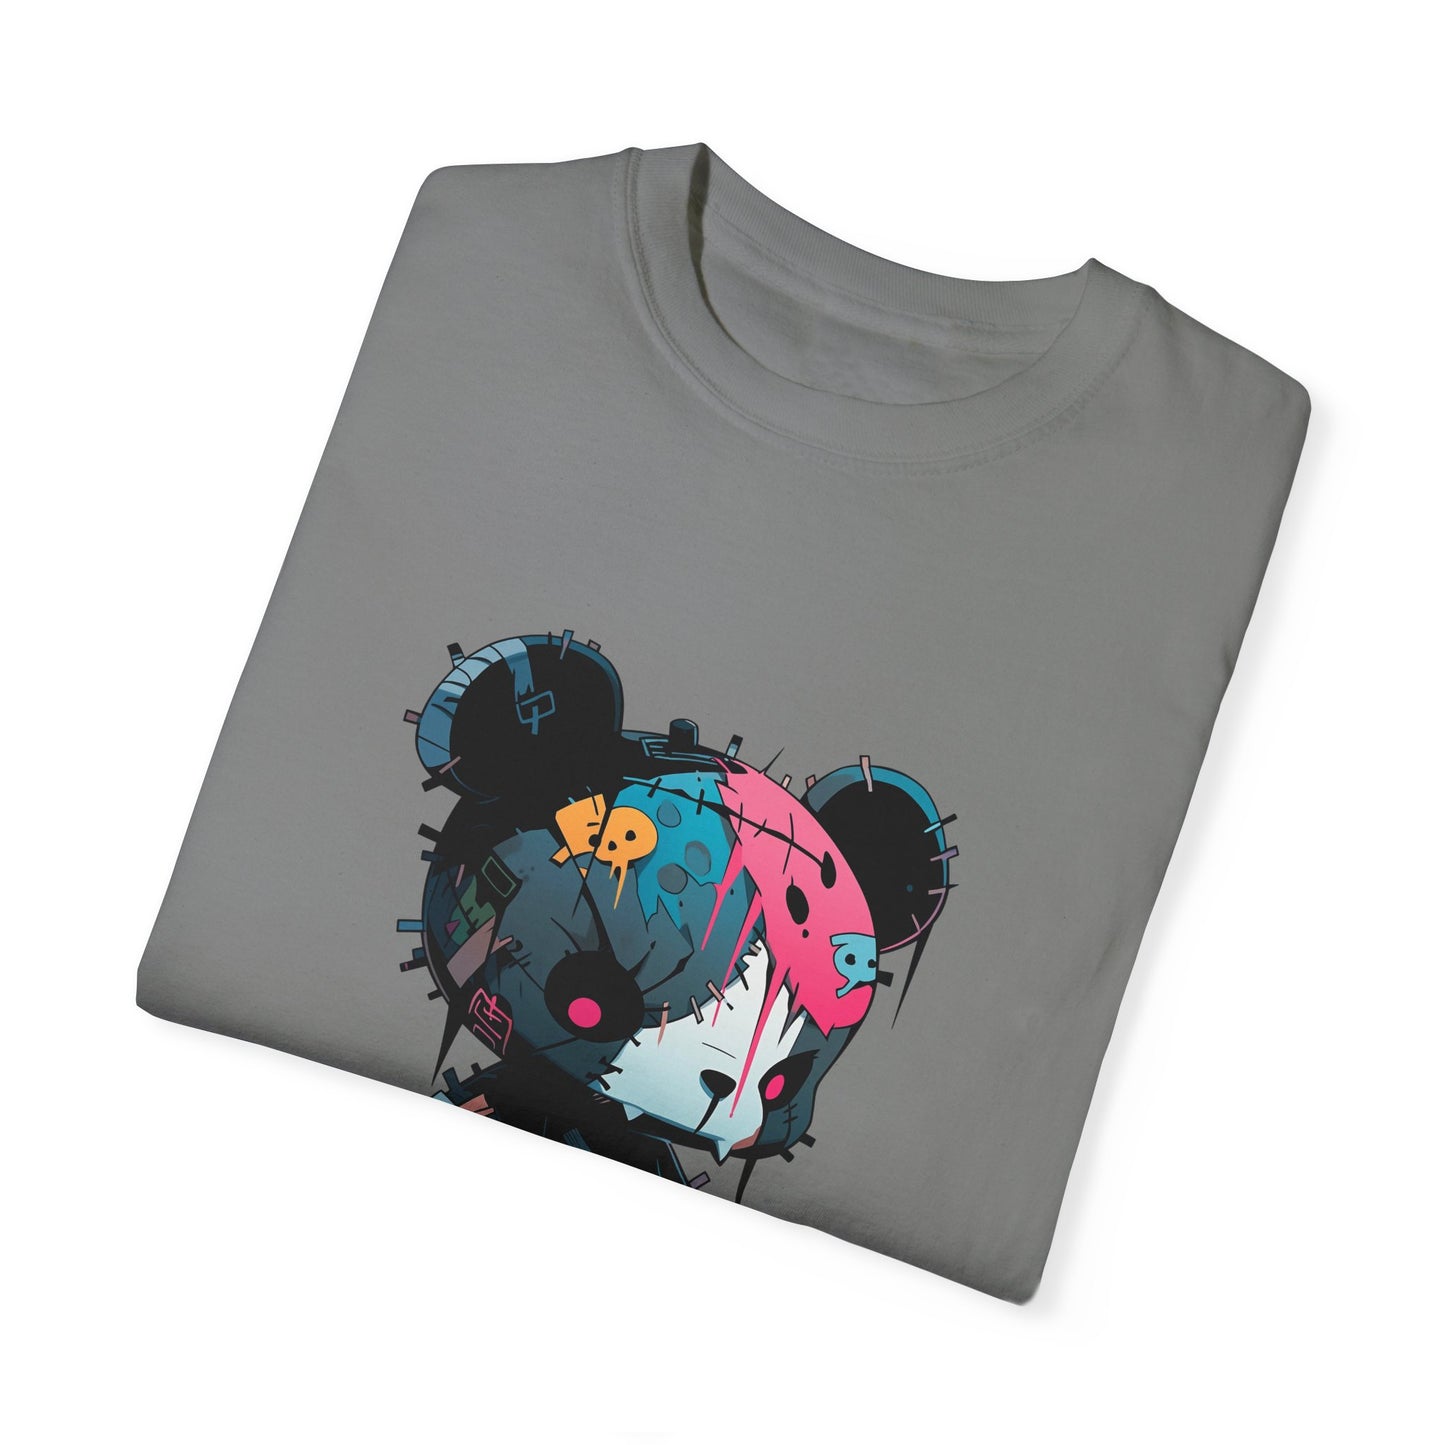 Hip Hop Teddy Bear Graphic Unisex Garment-dyed T-shirt Cotton Funny Humorous Graphic Soft Premium Unisex Men Women Grey T-shirt Birthday Gift-41